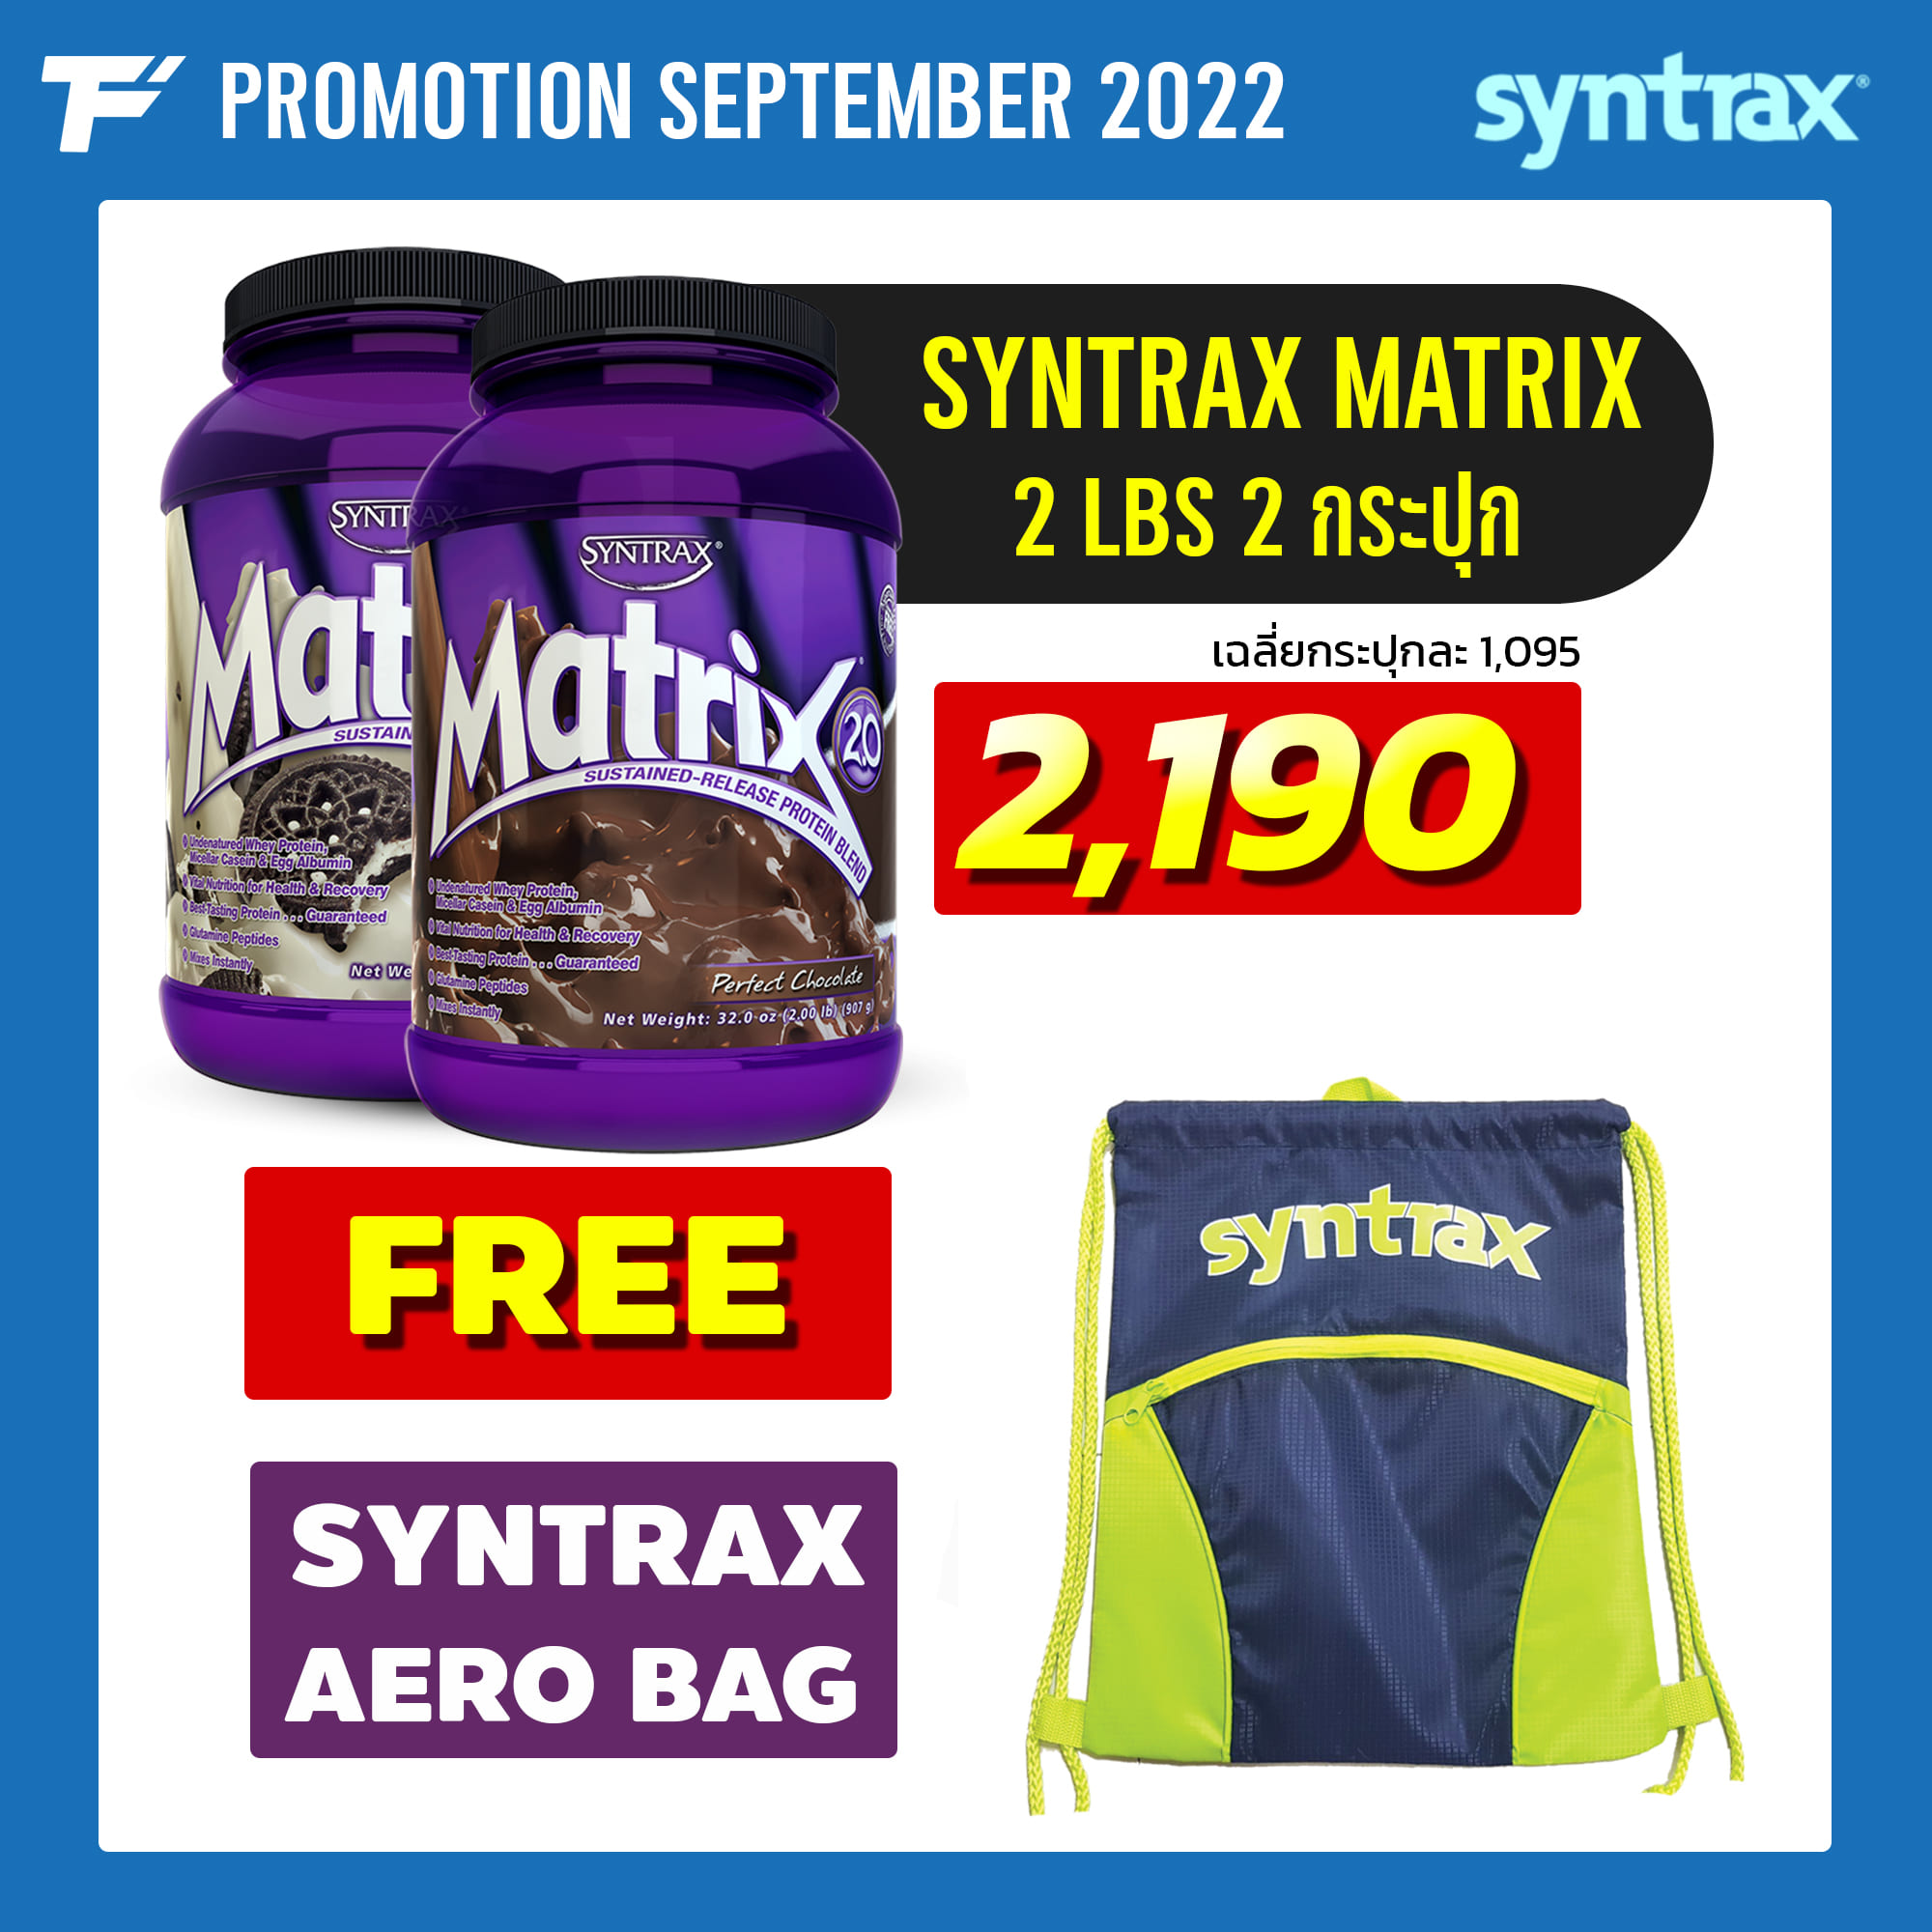 Syntrax Matrix 100% Whey Protein - 2 LB(copy)